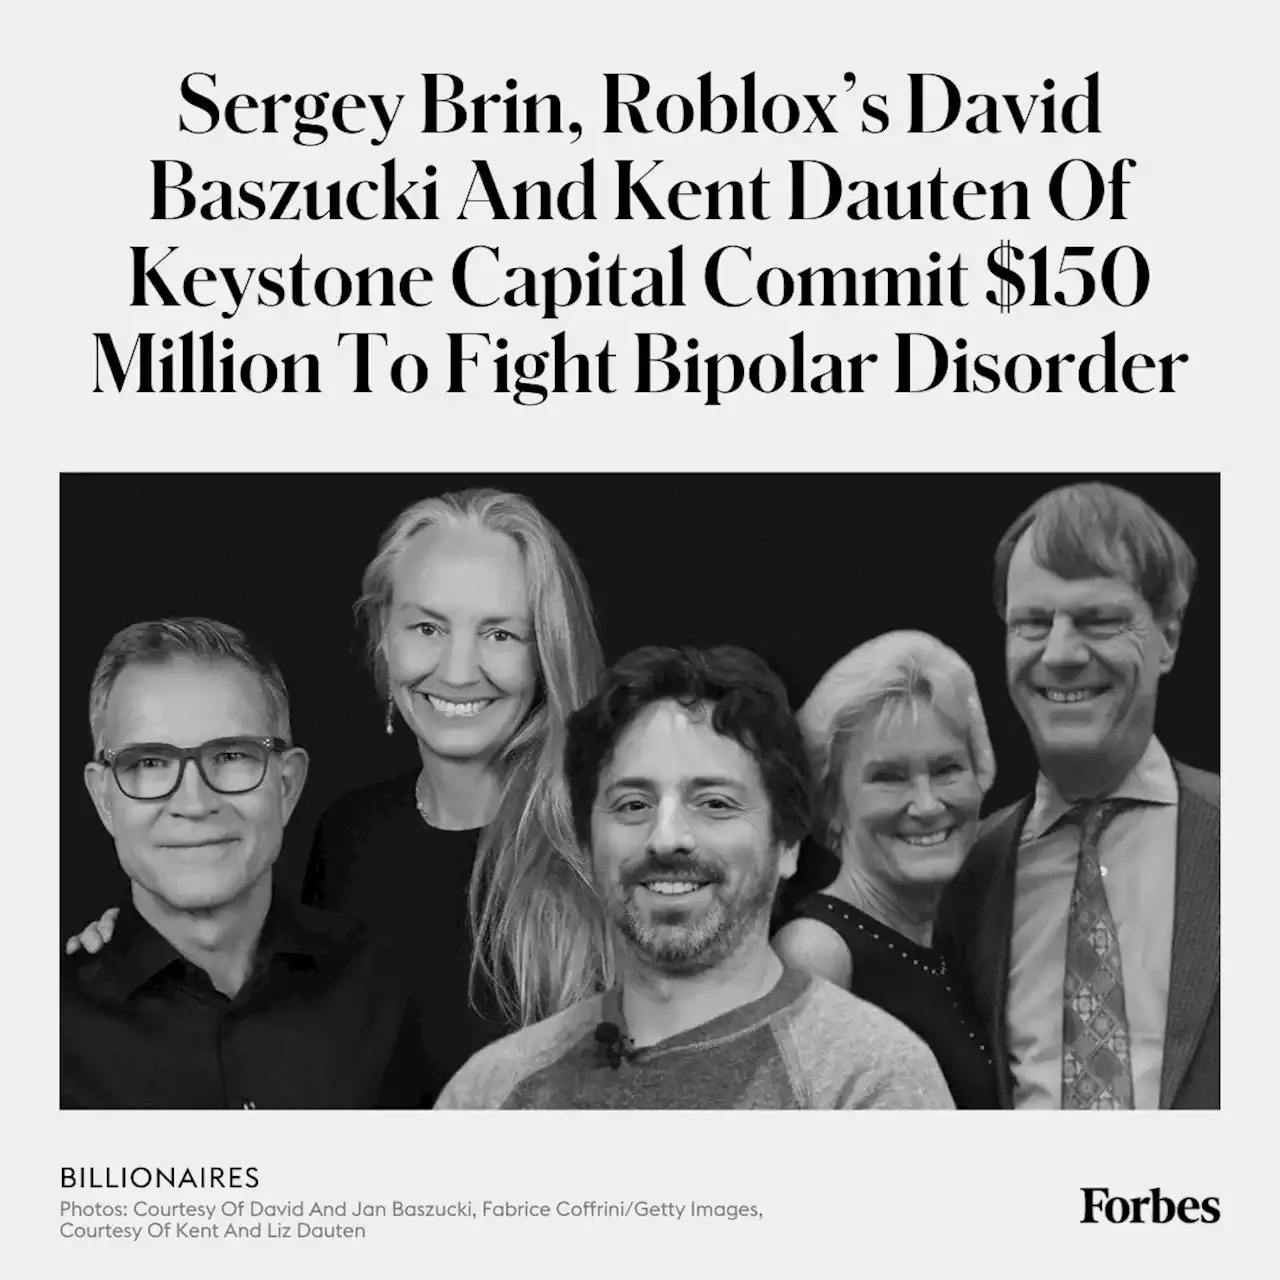 Sergey Brin, Roblox's David Baszucki And Kent Dauten Of Keystone Capital  Commit $150 Million To Fight Bipolar Disorder